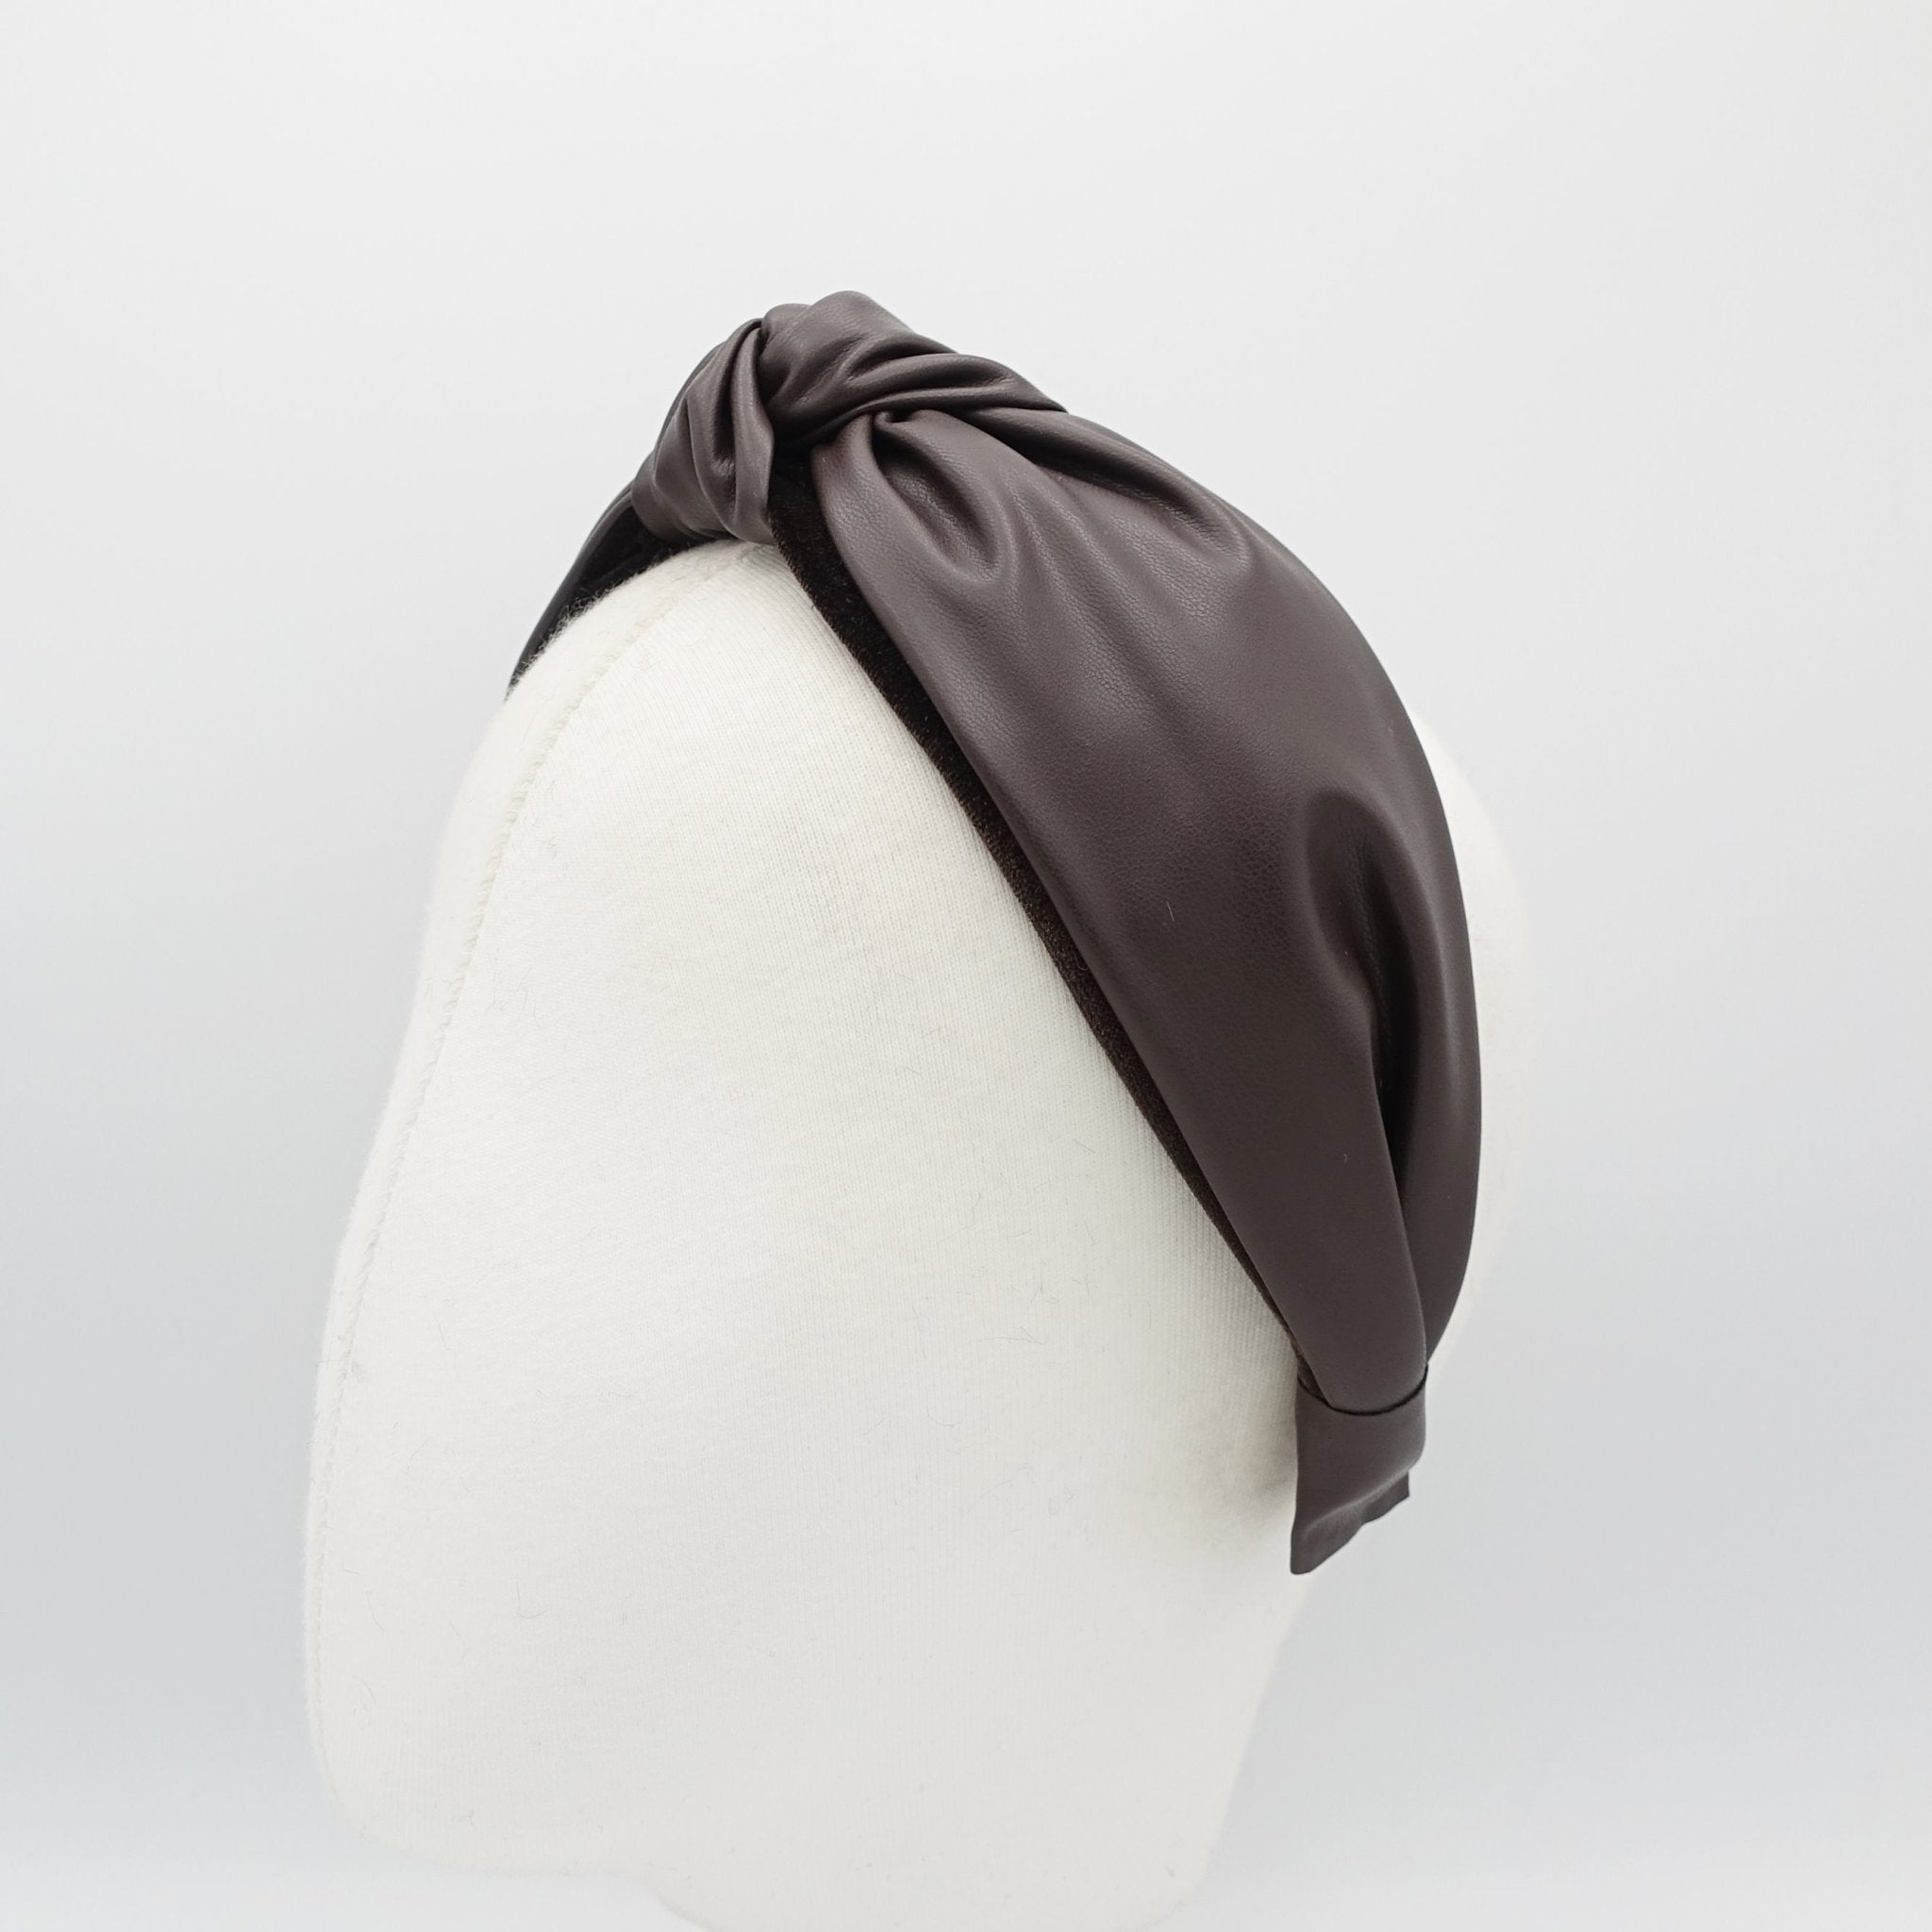 veryshine.com hairband/headband velvet layered leather top knot headband stylish women hair accessory